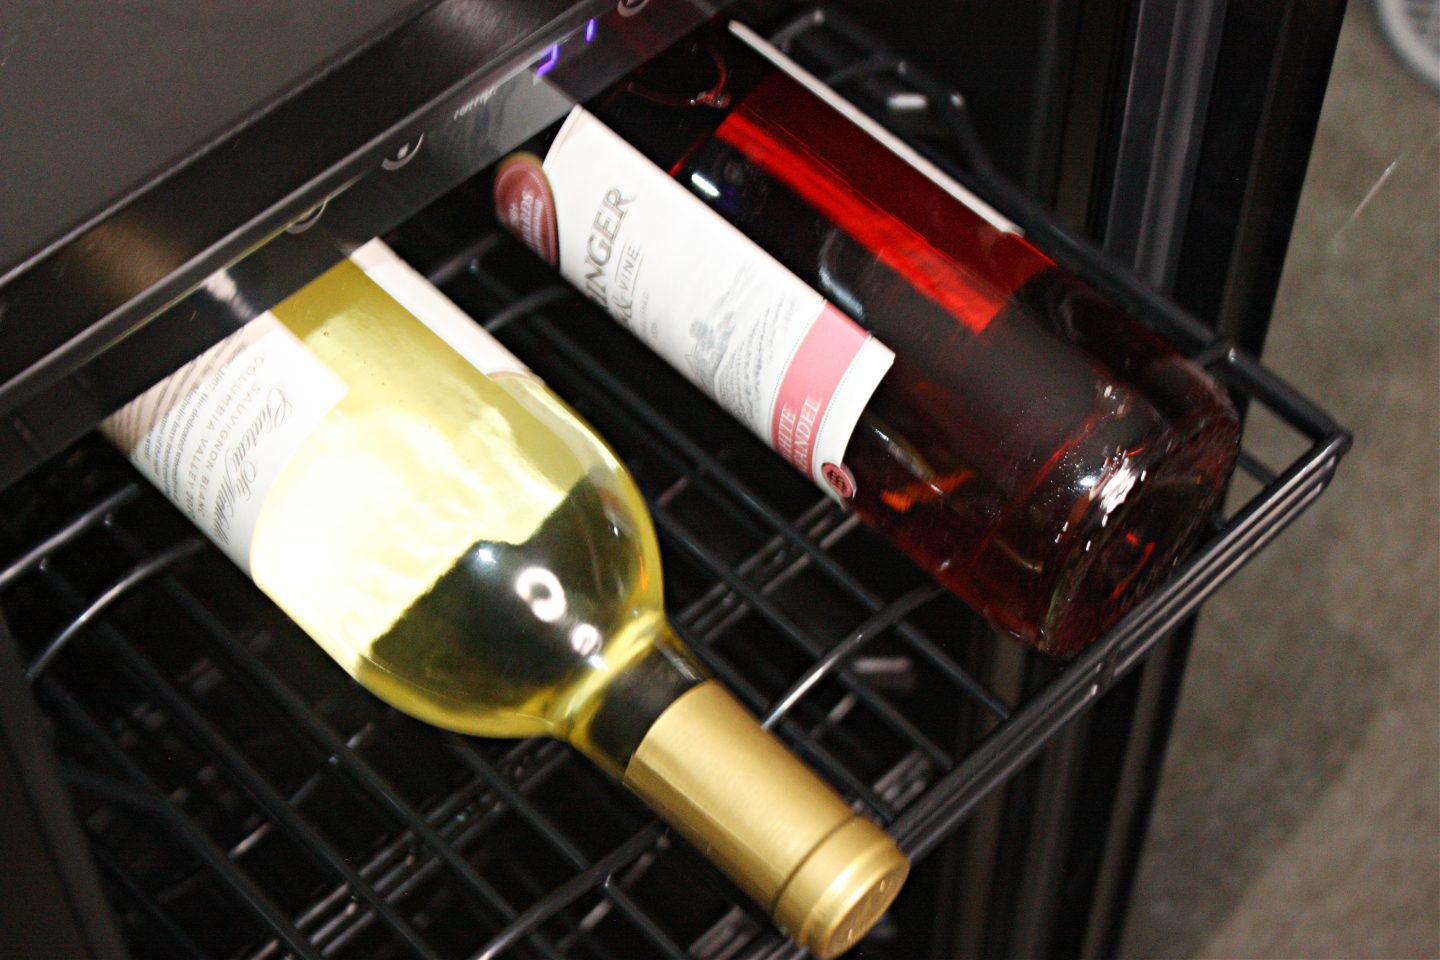 The Newair 15" FlipShelf™ Wine and Beverage Refrigerator